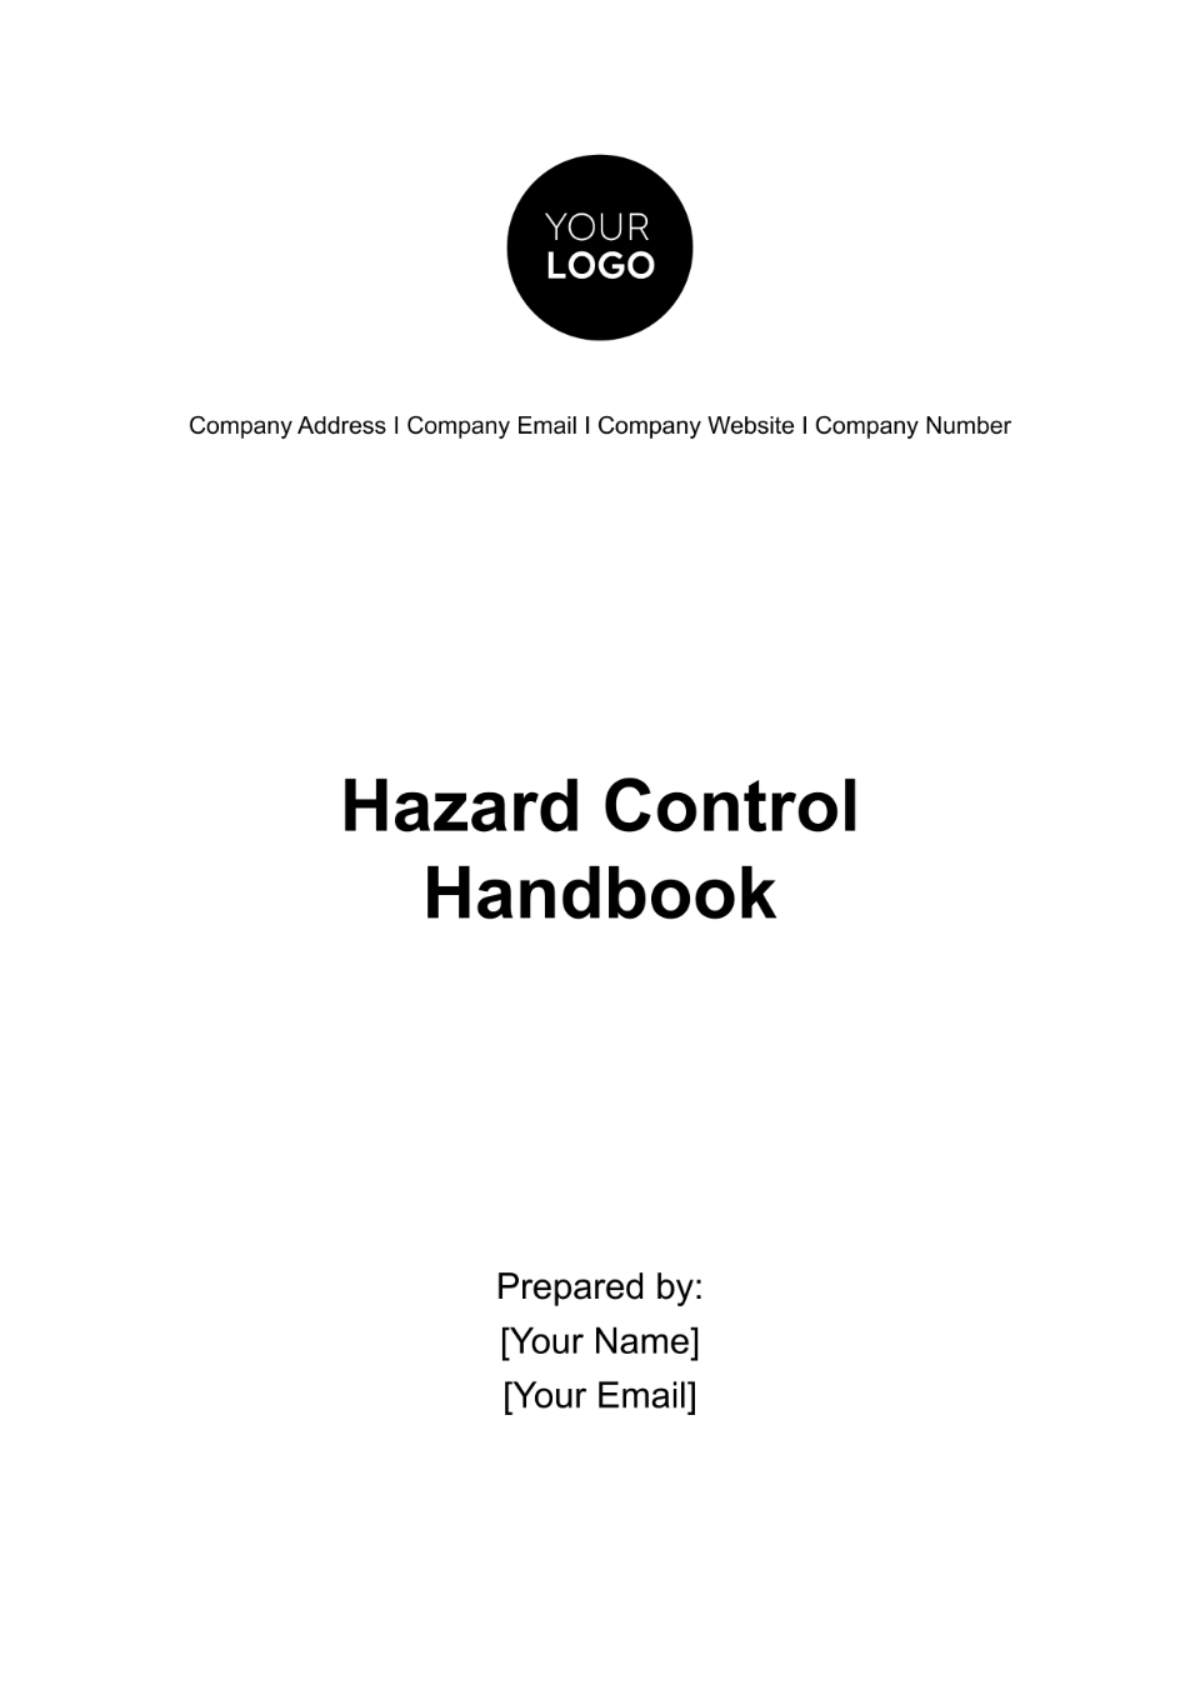 Hazard Control Handbook Template